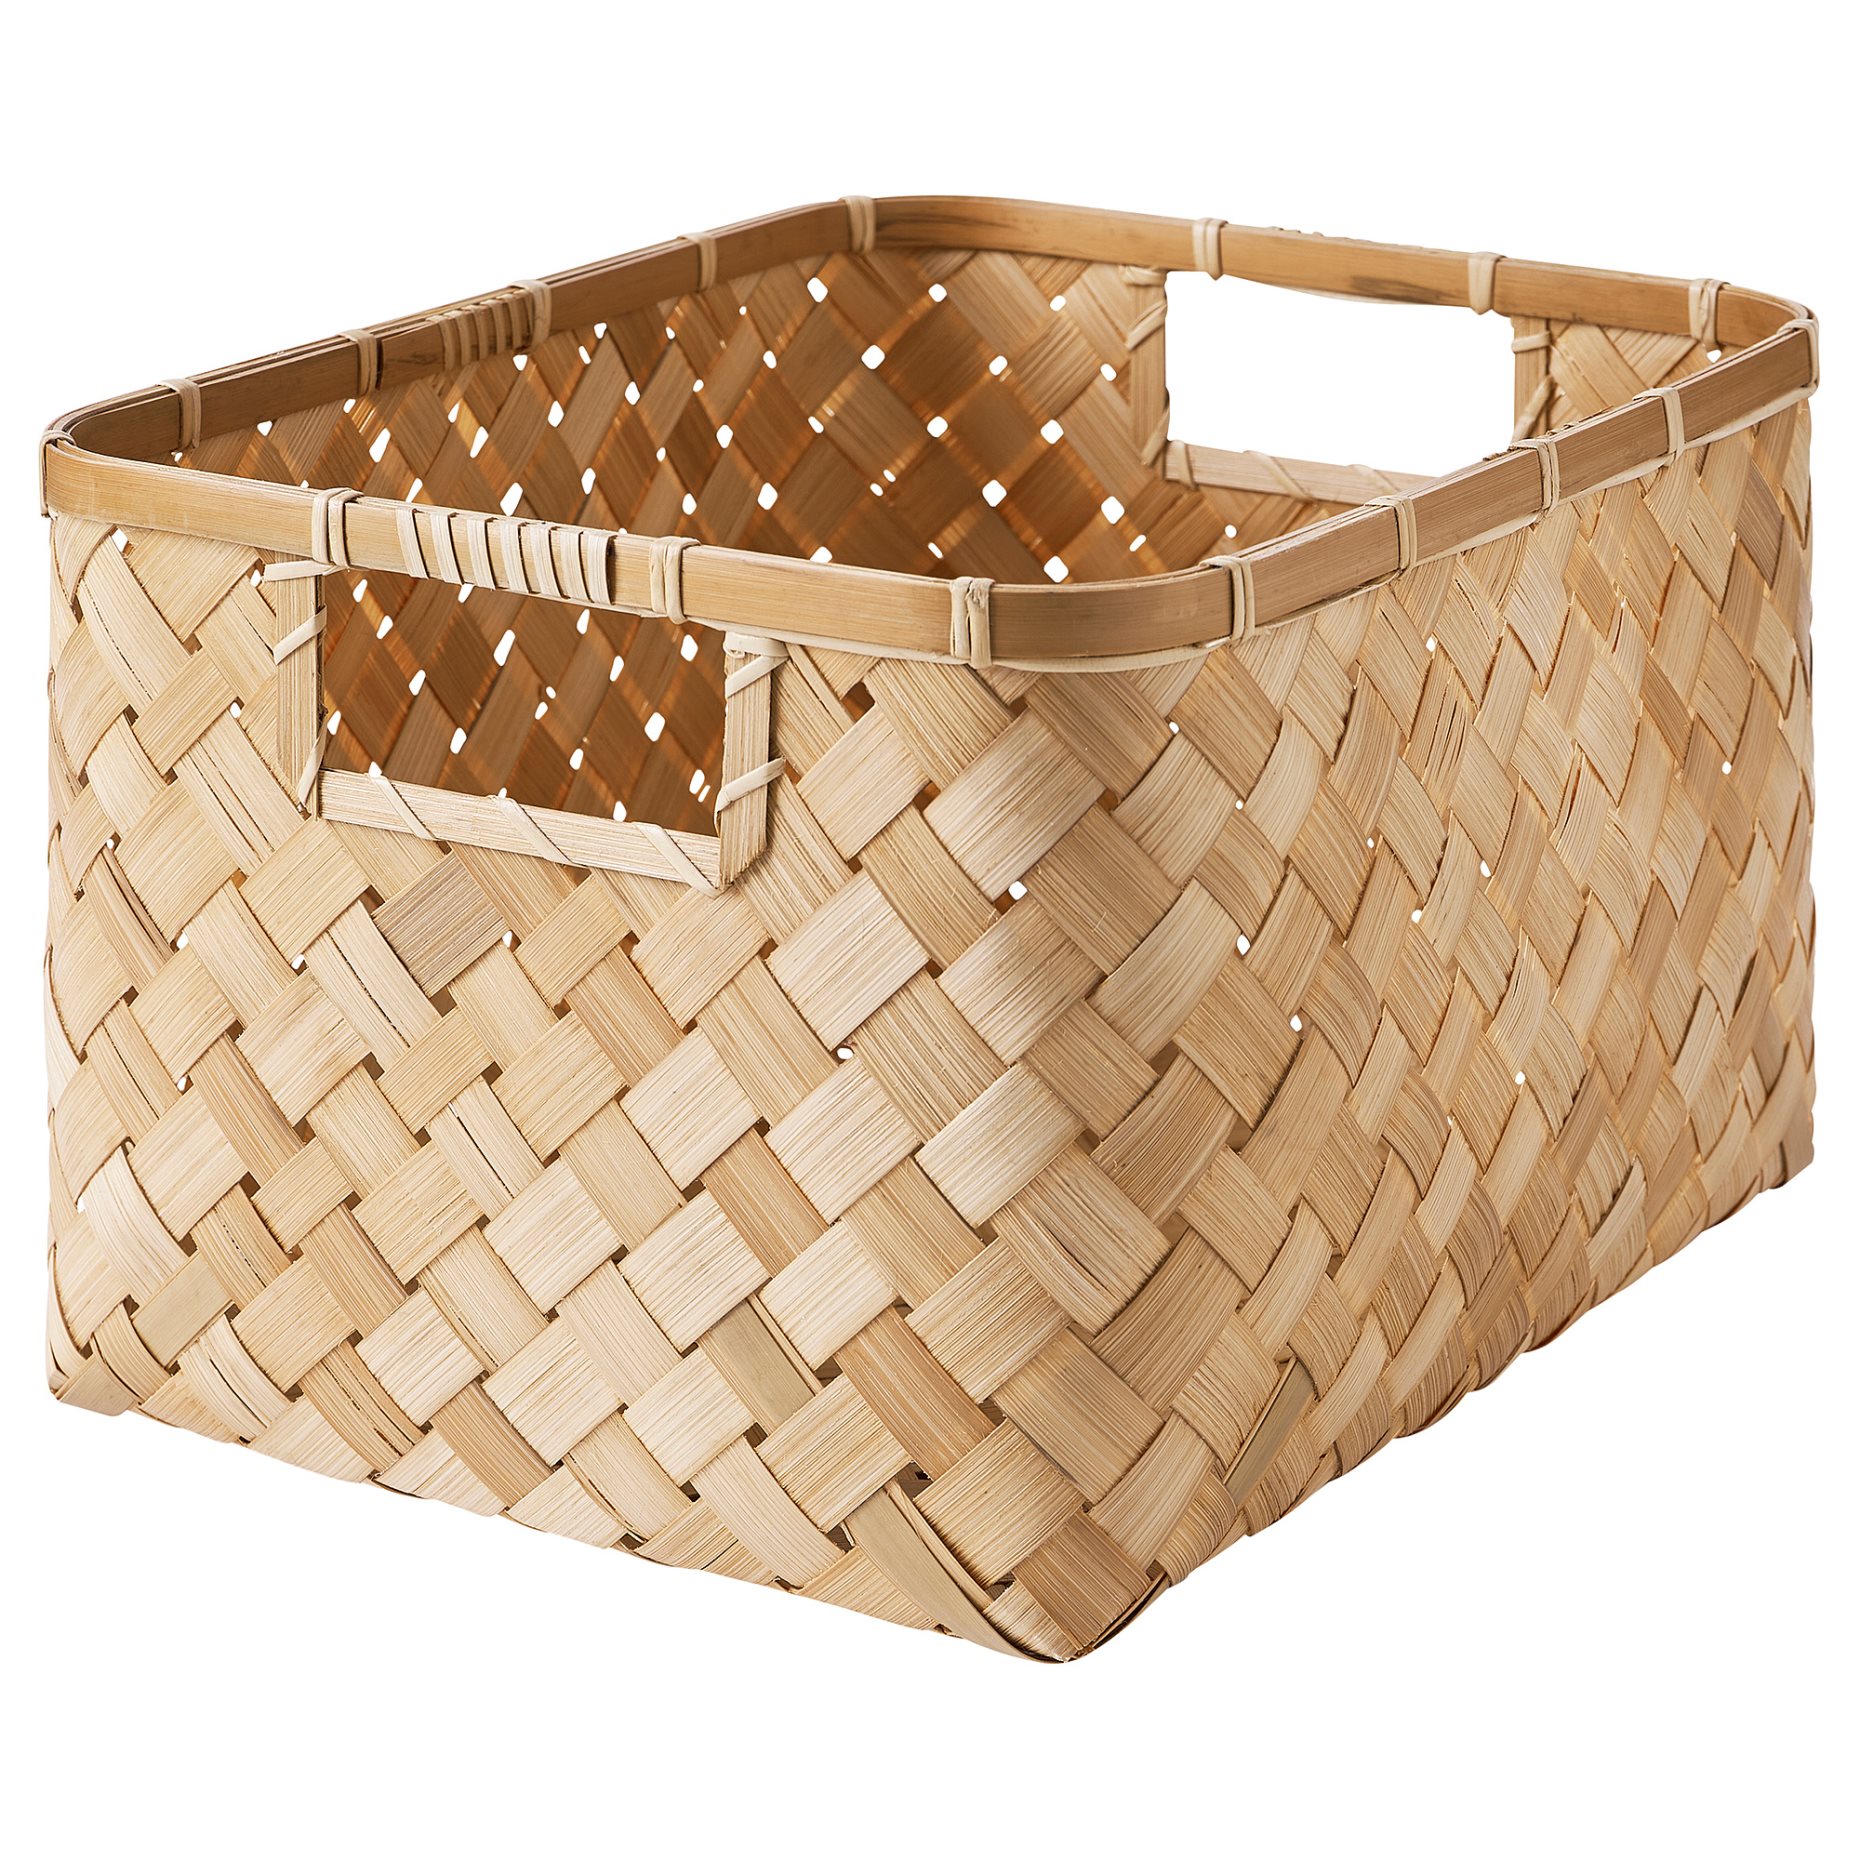 VÄXTHUS, basket/handmade, 25x35x20 cm, 505.511.36